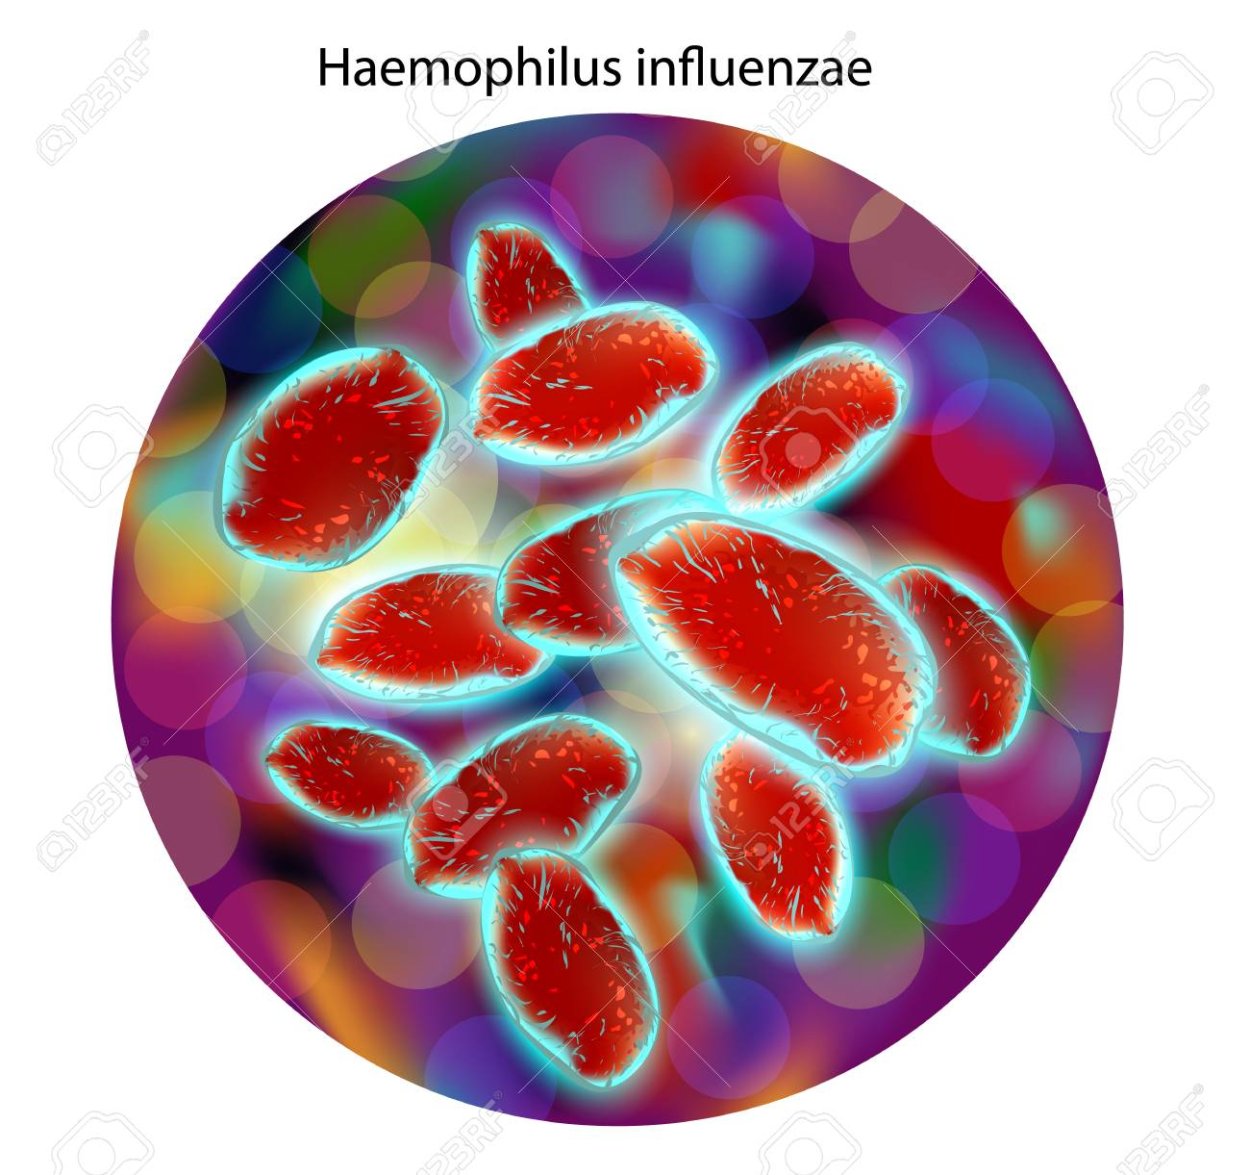 Haemophilus influenzae b. Бактерии Haemophilus influenzae. Гемофильная инфекция возбудитель. Бактерия гемофильная палочка. Гемофилус инфлюэнце.